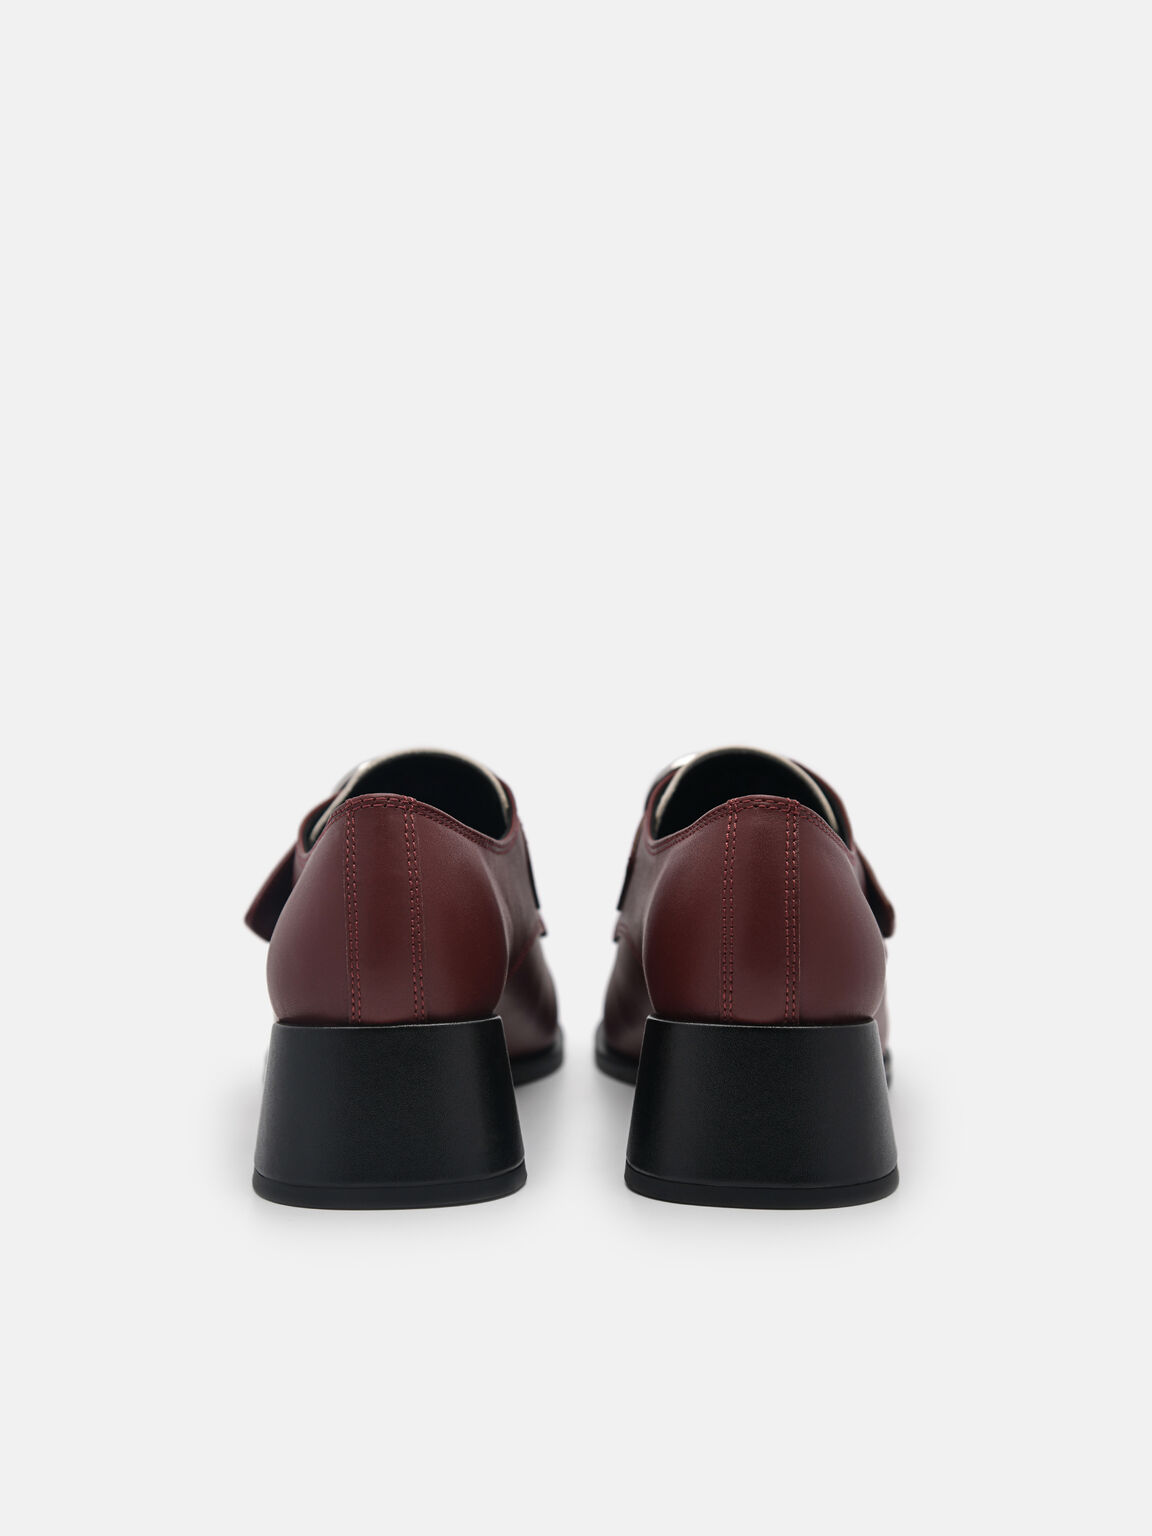 Eden Leather Heel Loafers, Multi, hi-res